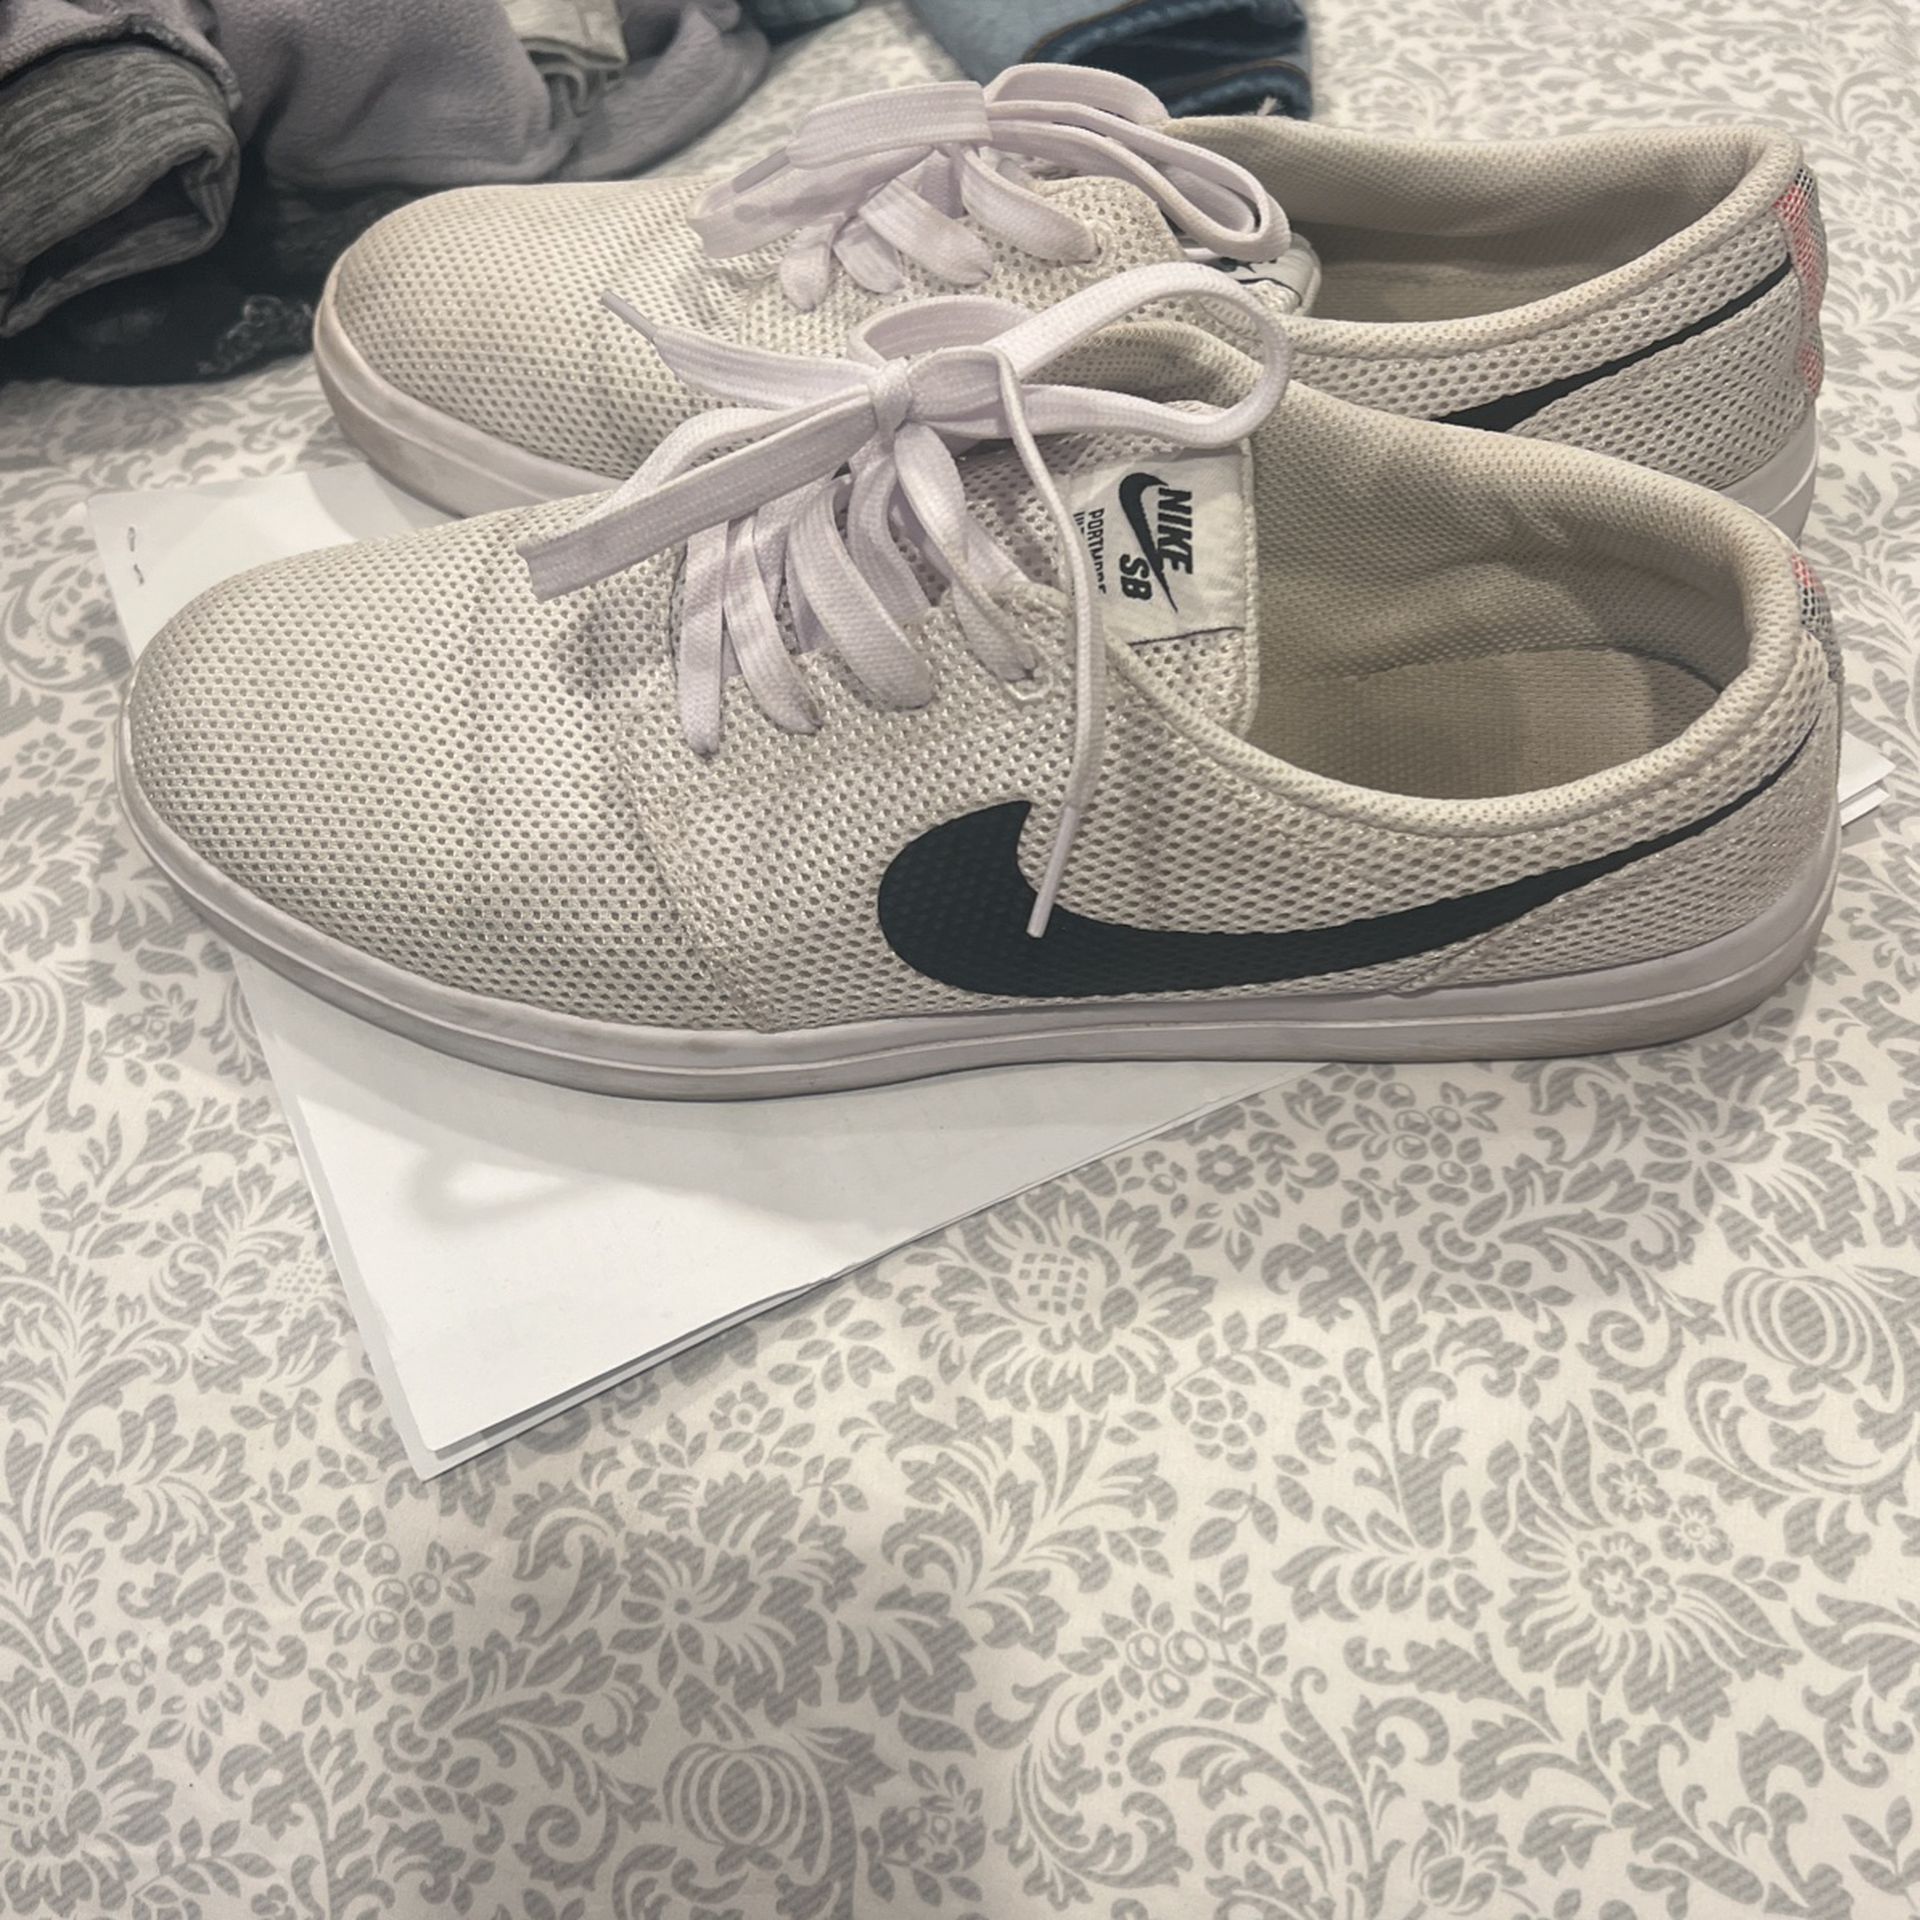 Nike Shoe Size 11